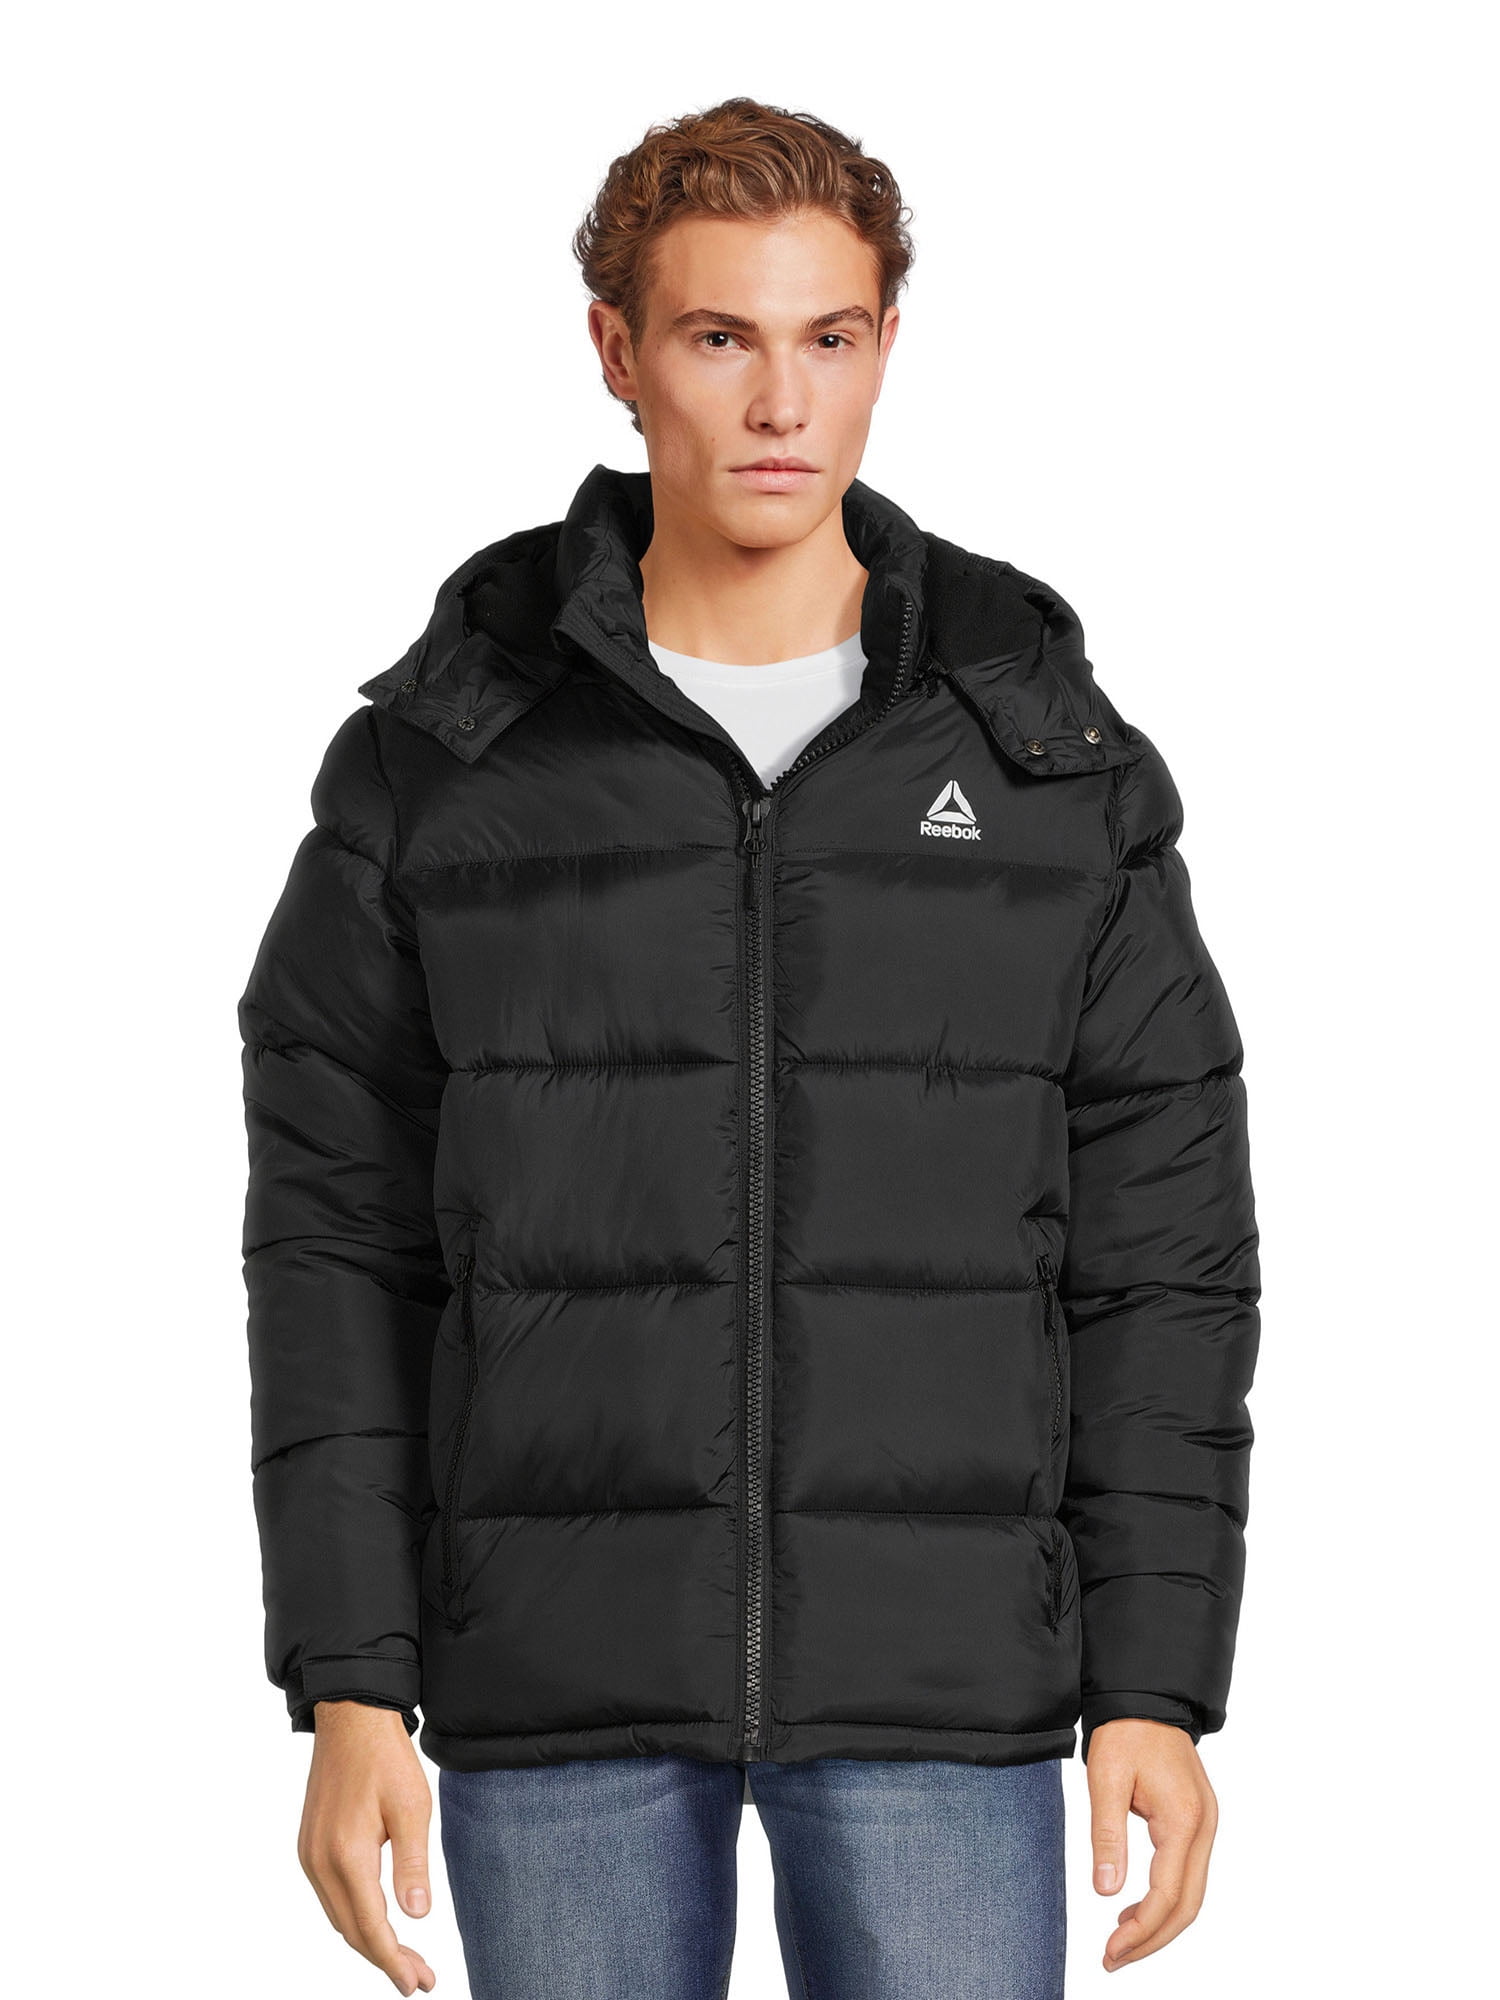 Reebok Men's Hooded Puffer Jacket, Sizes S-3XL - Walmart.com